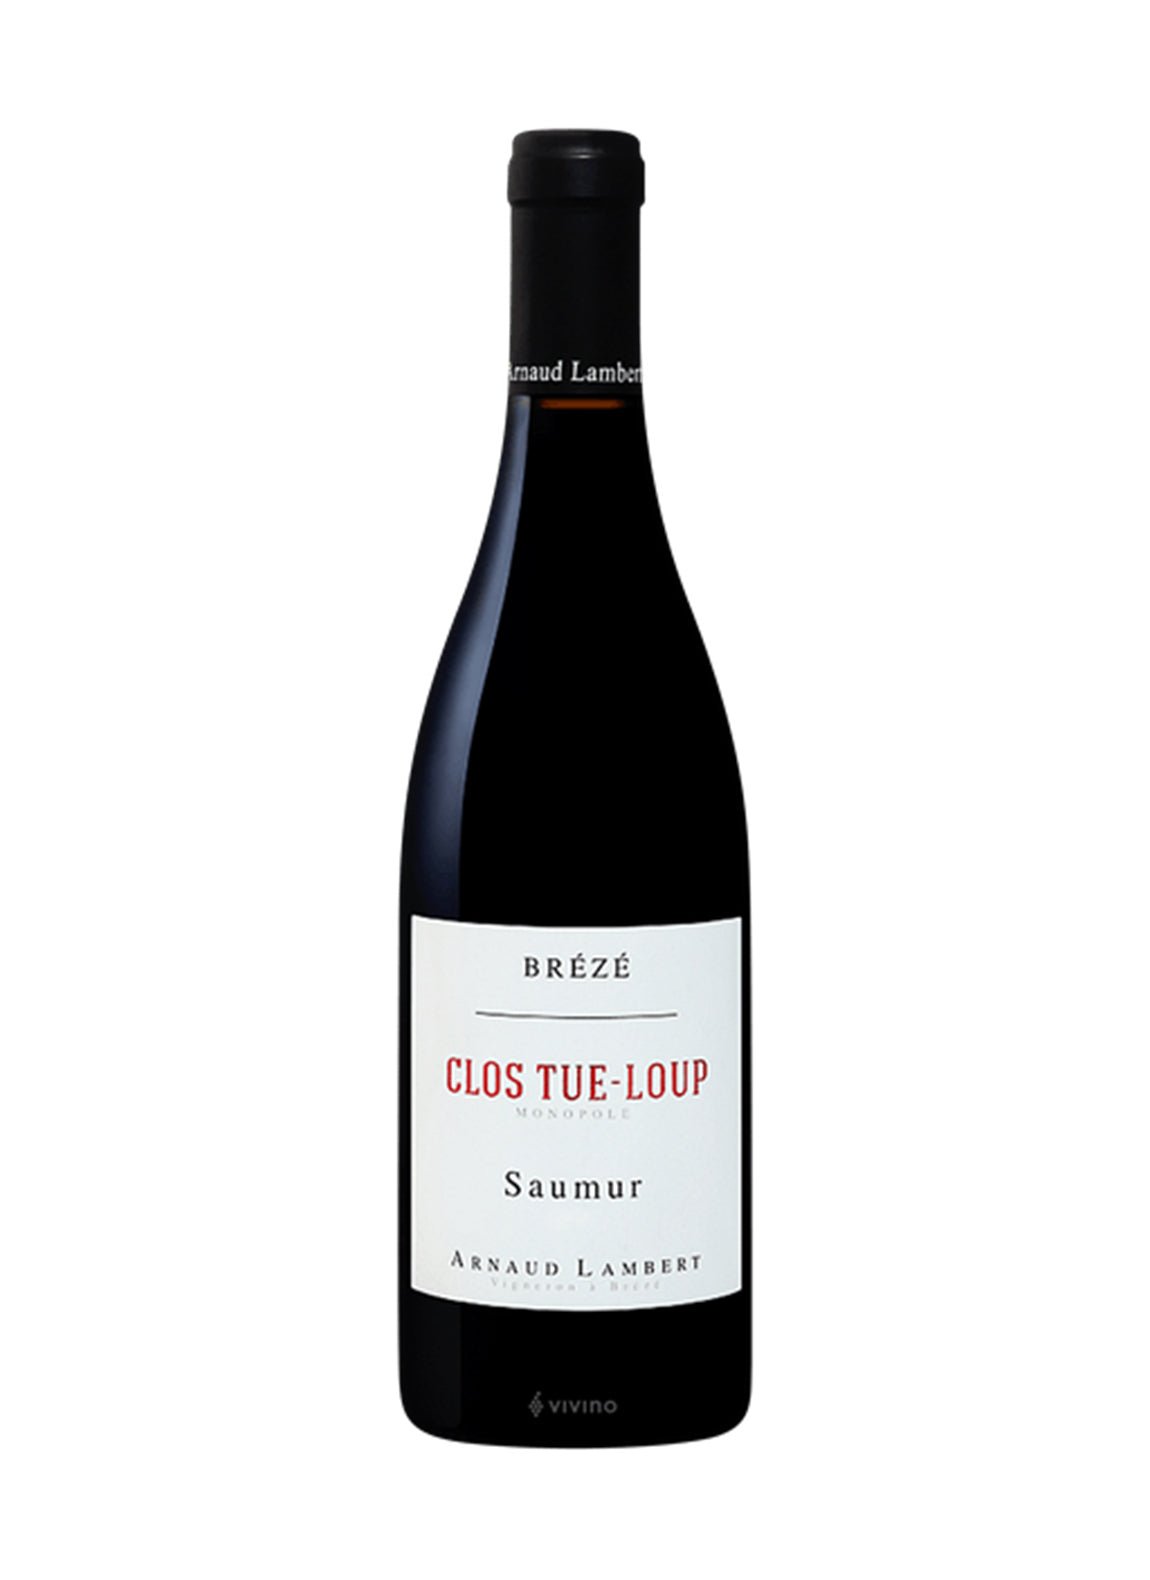 Arnaud Lambert 'Breze' Saumur Rouge Clos Tue Loup 2019 - Wine France White - Liquor Wine Cave